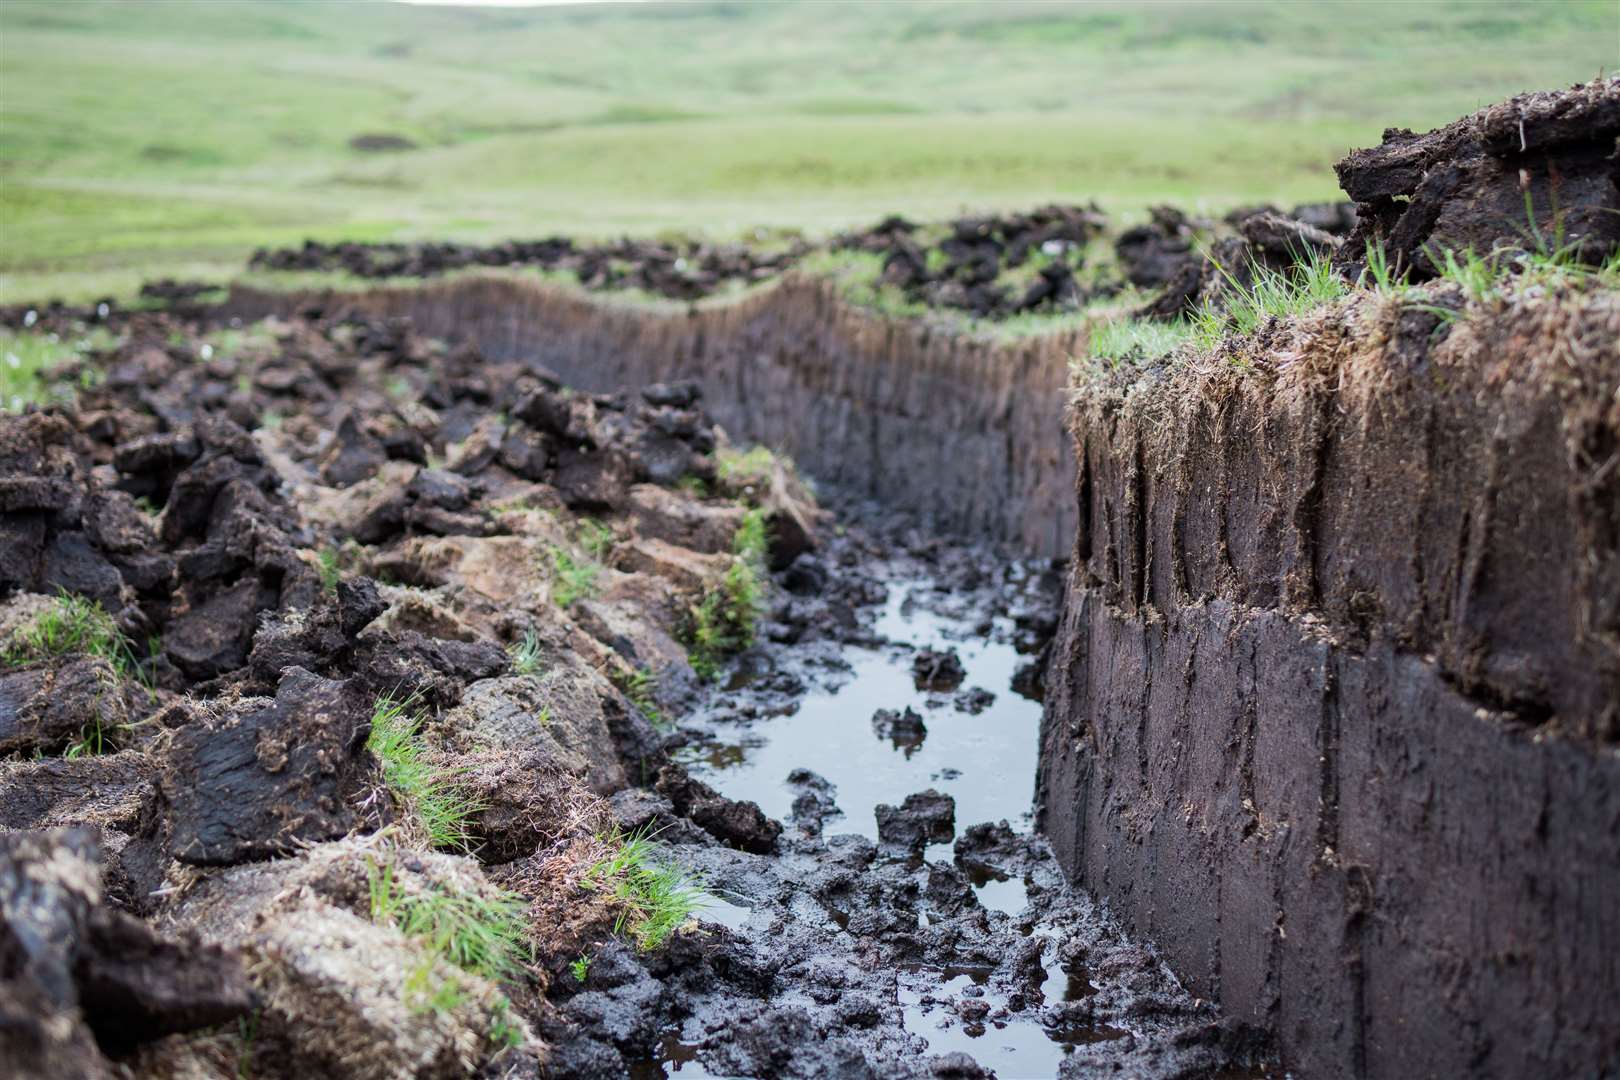 Peat digging on the Isle of Skye.